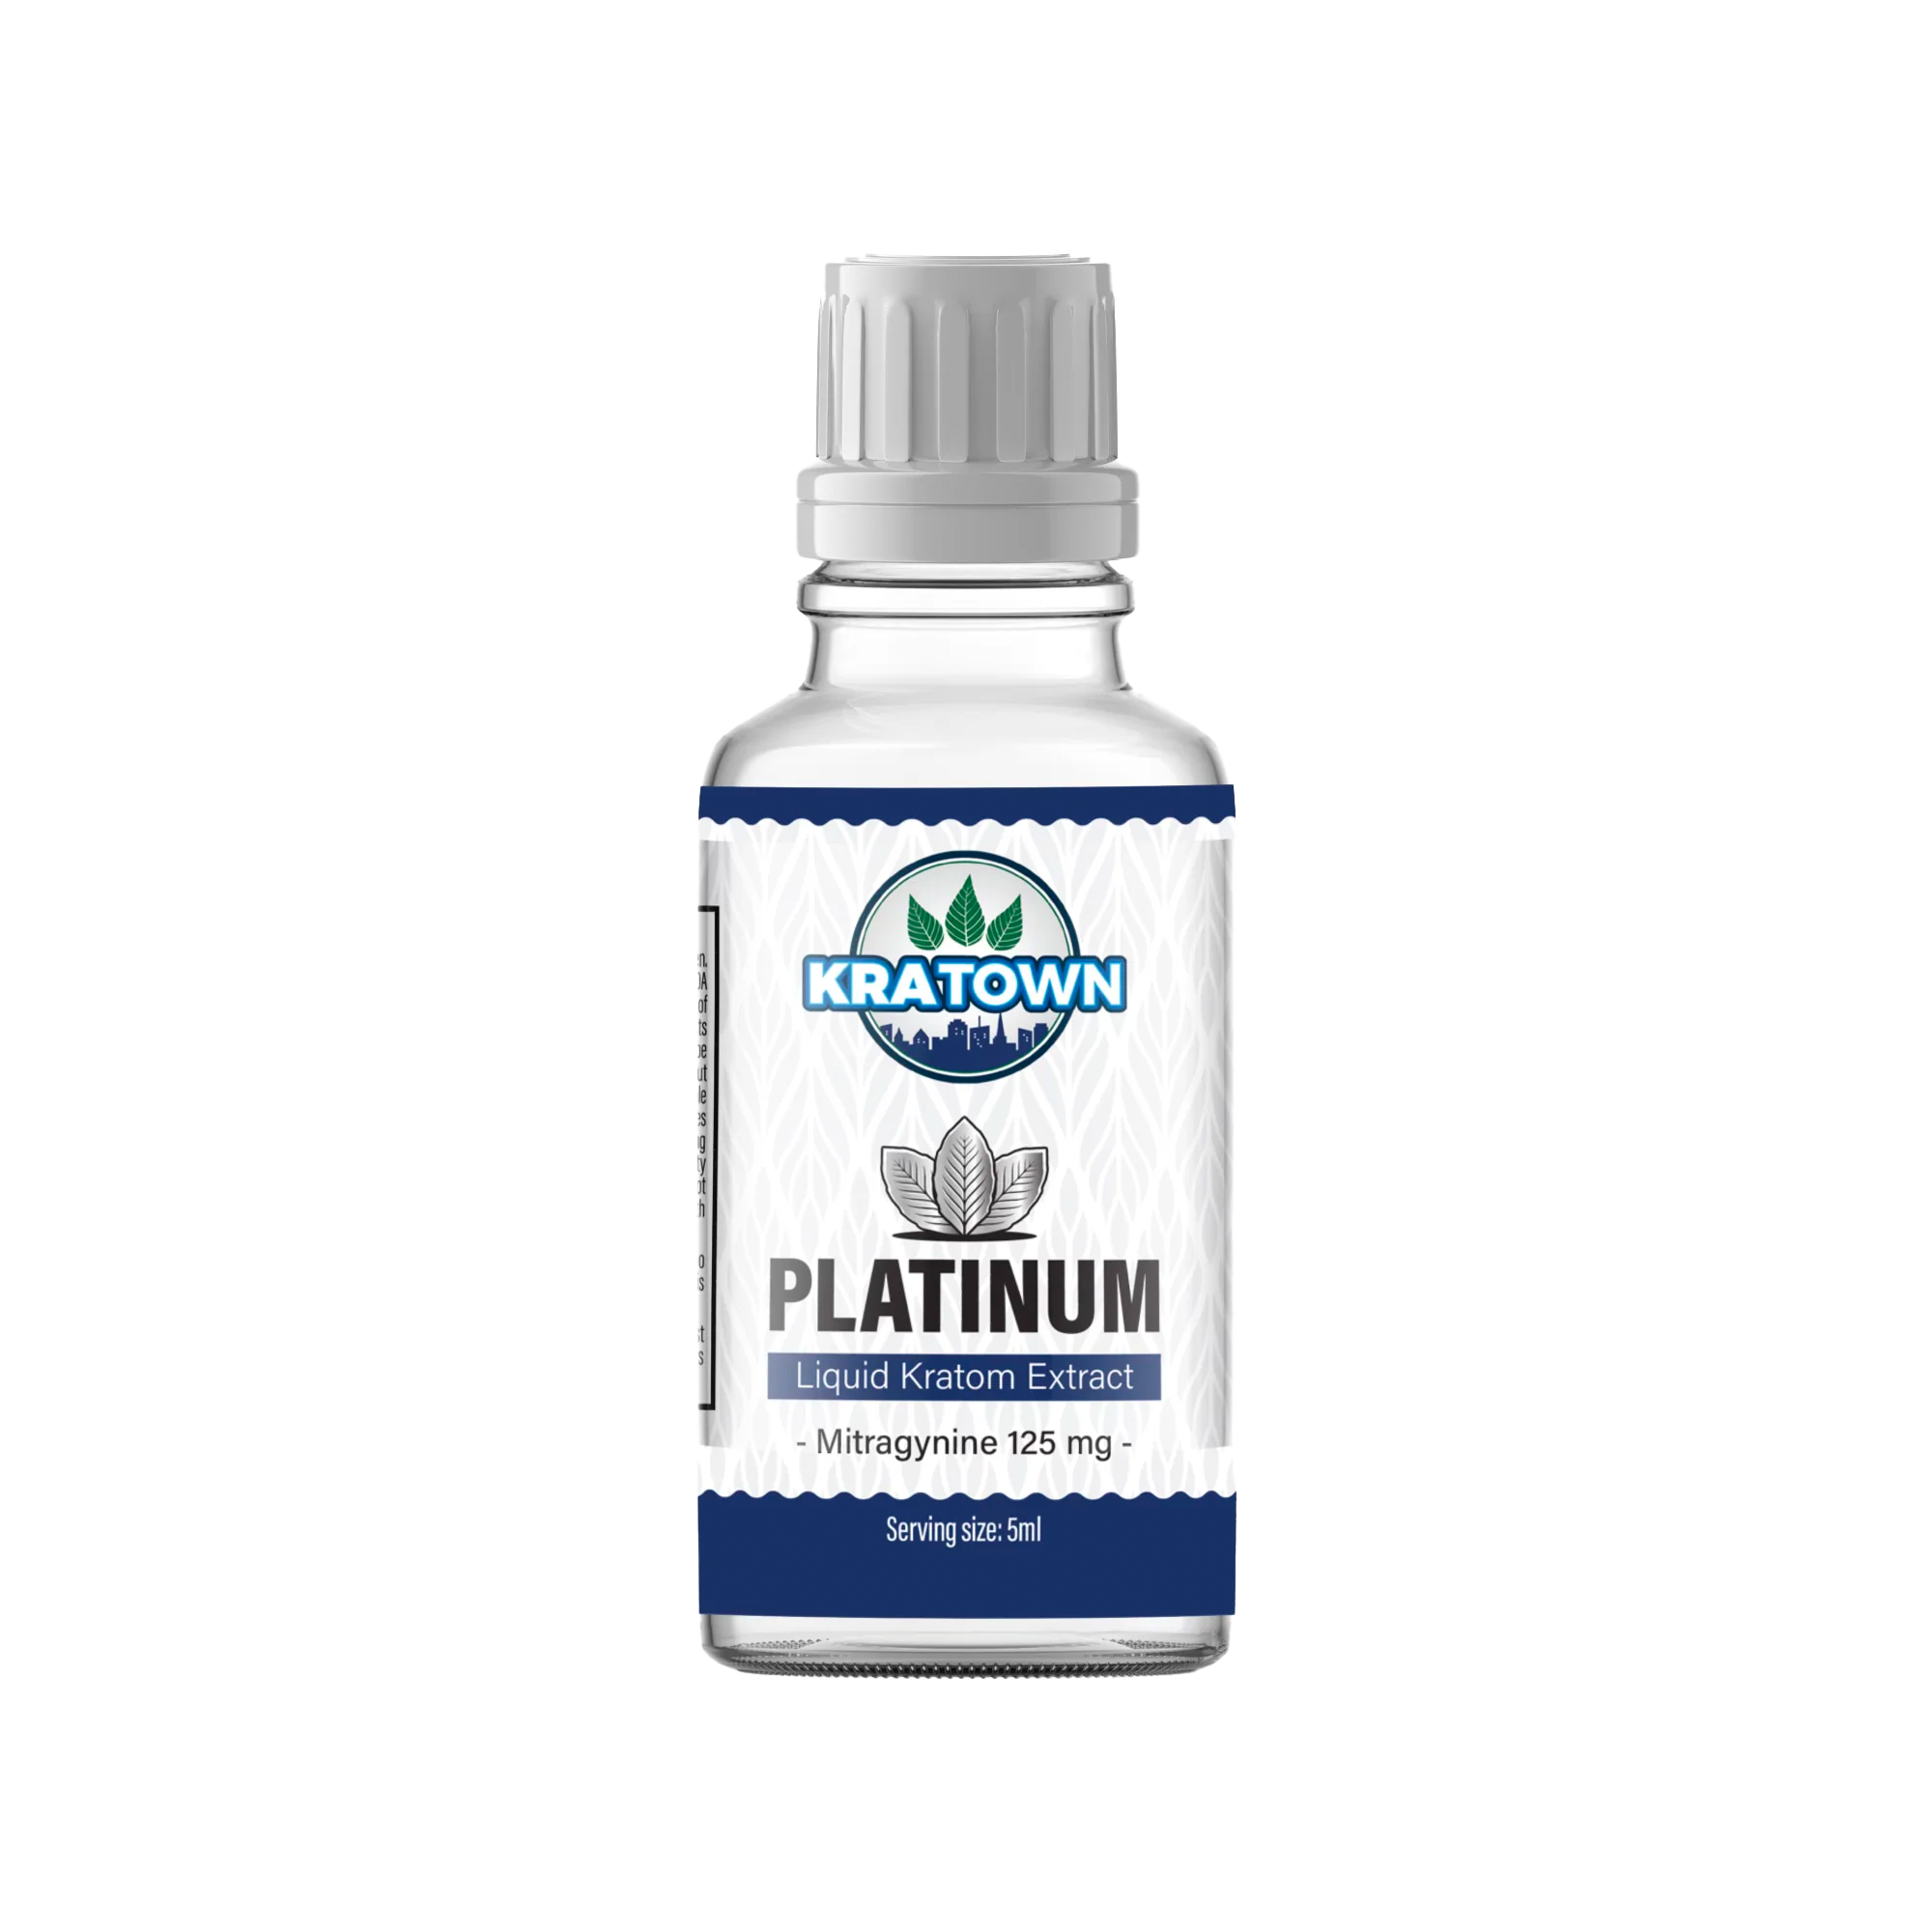 Kratown Platinum Liquid Extract Shot